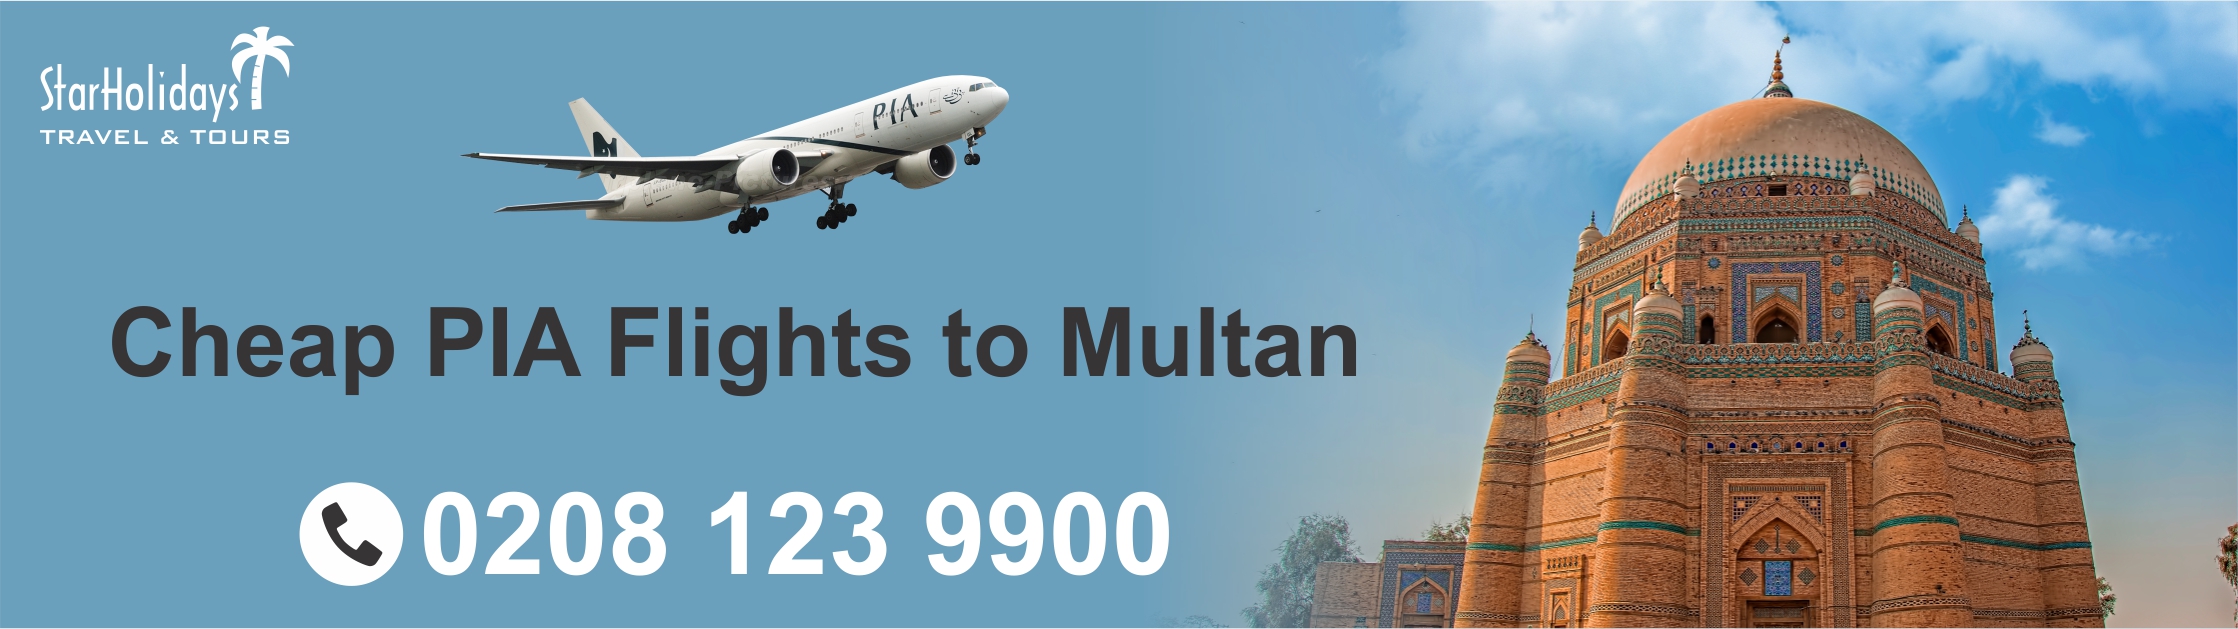 Cheap PIA Flights to Multan